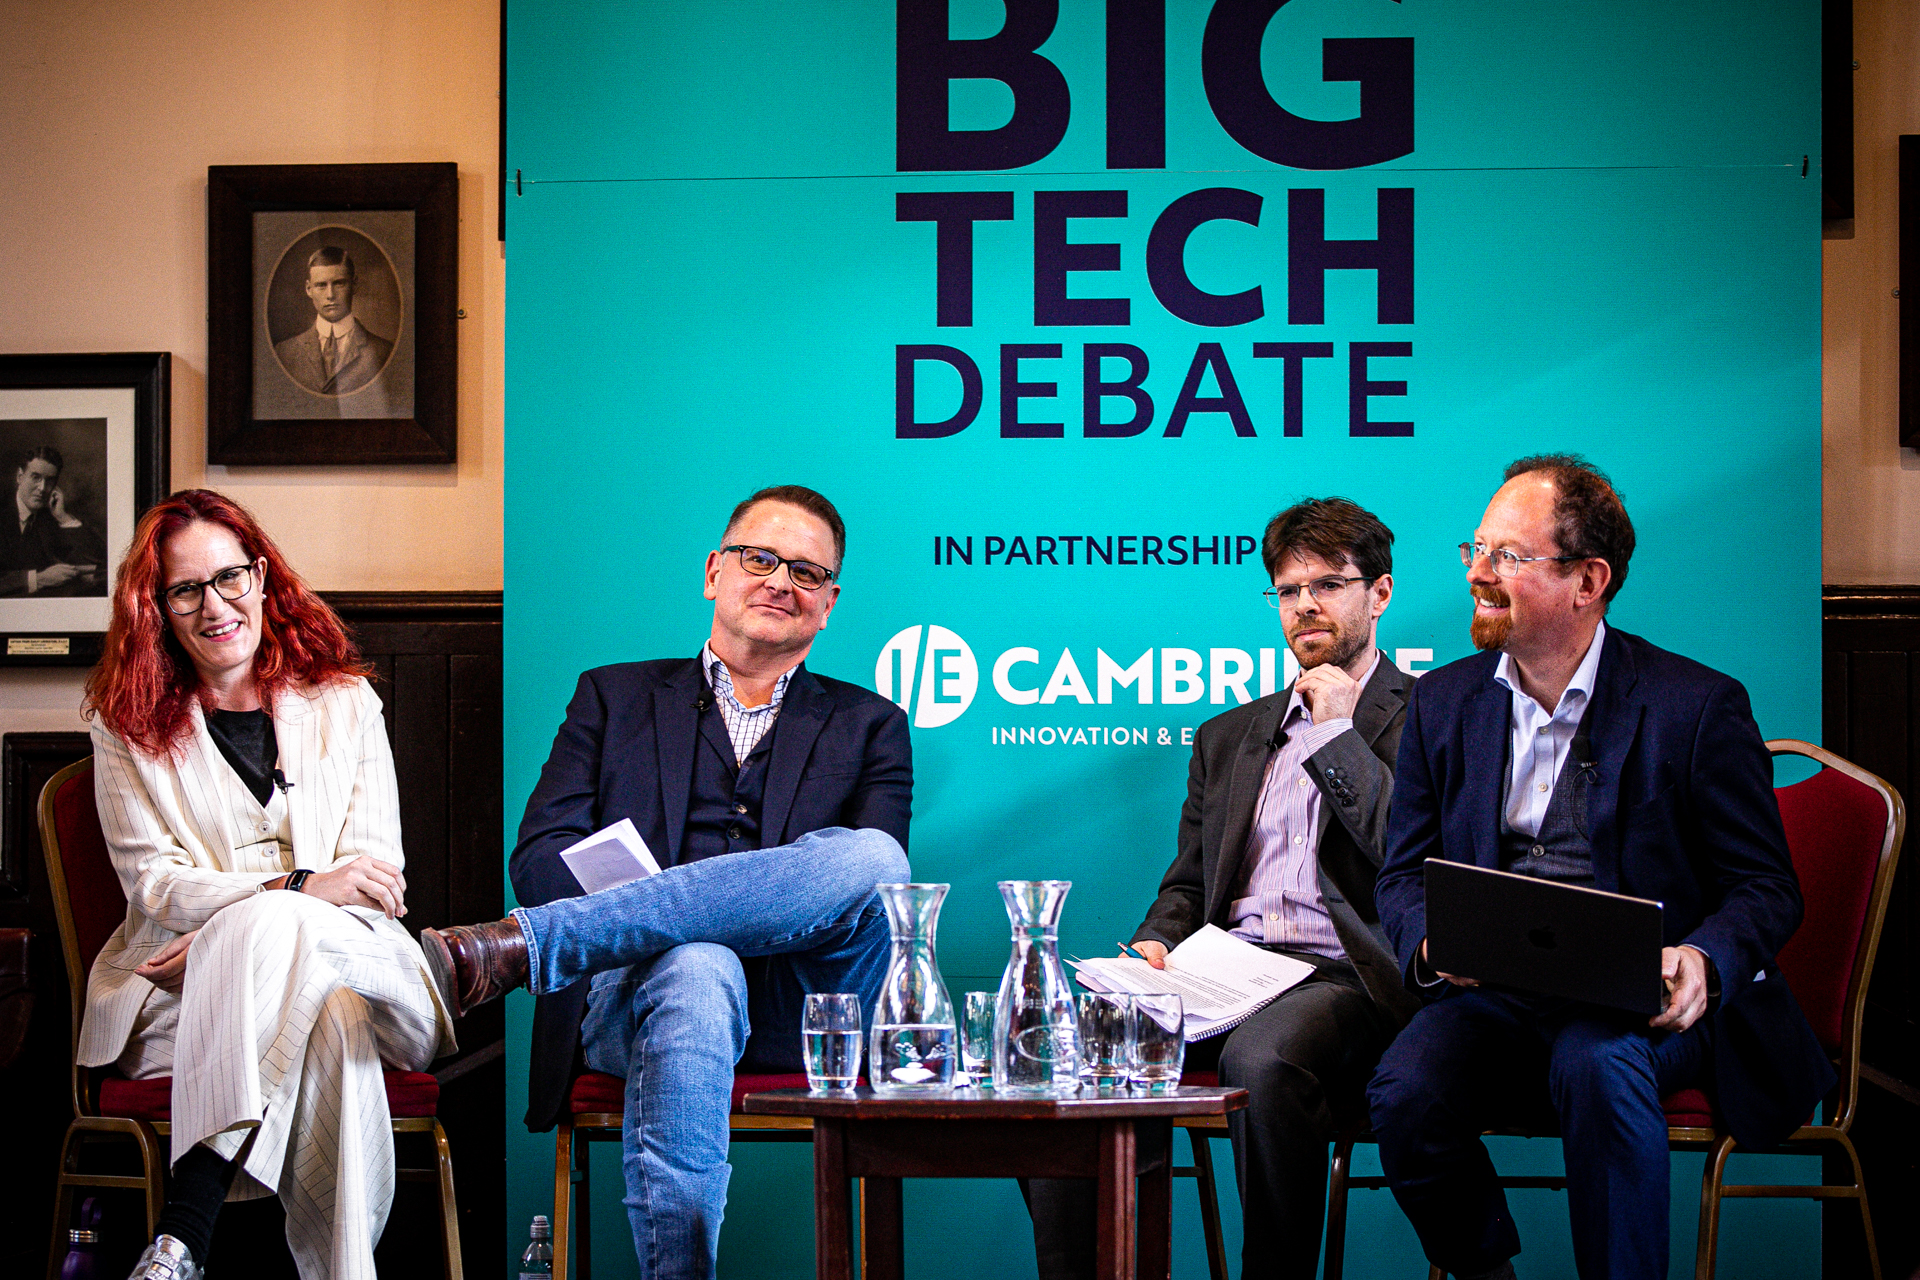 Big tech debate at Cambridge